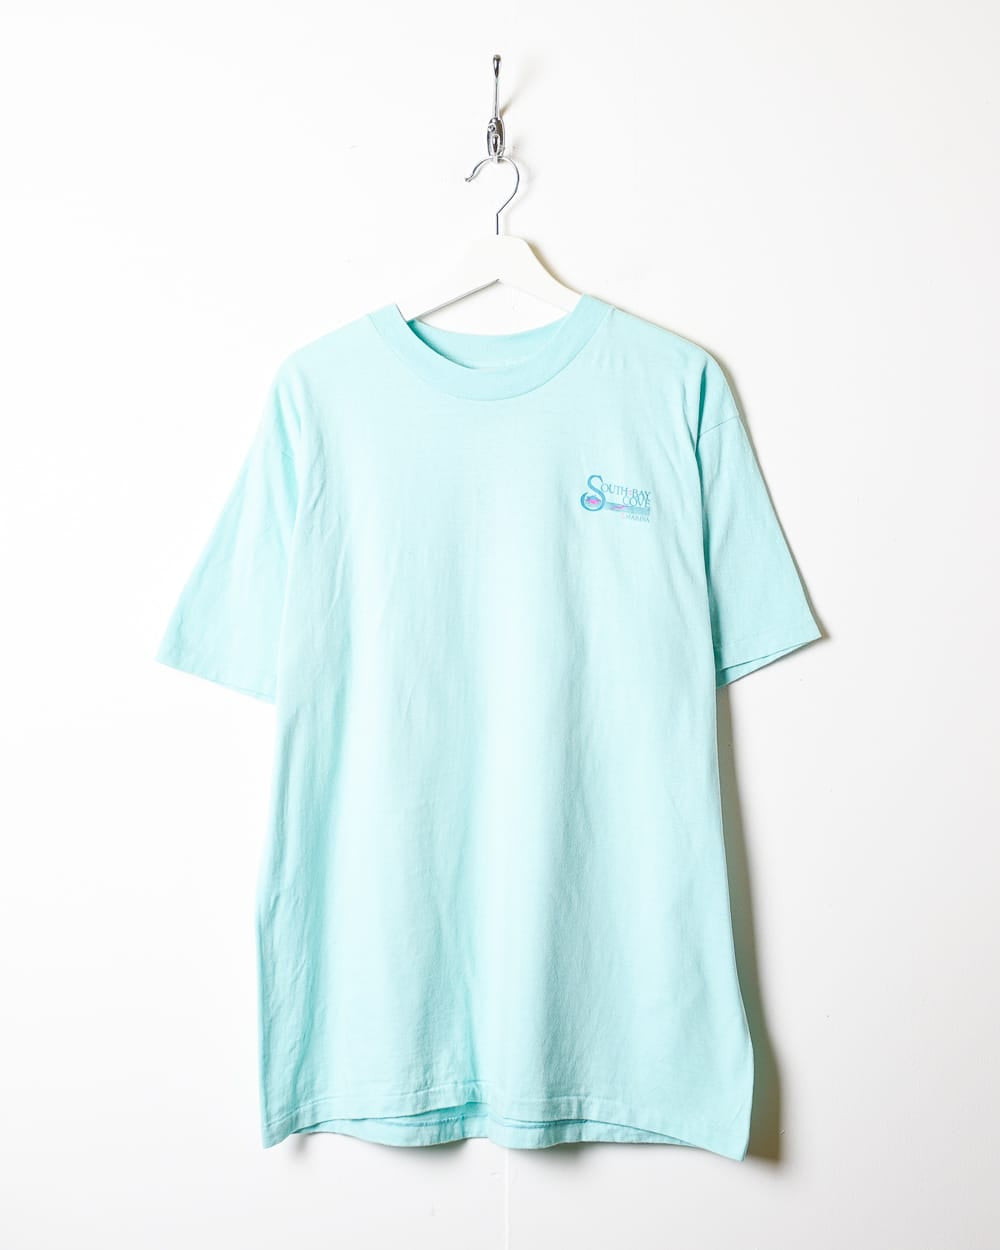 BabyBlue South Bay Cove Marina Single Stitch T-Shirt - X-Large